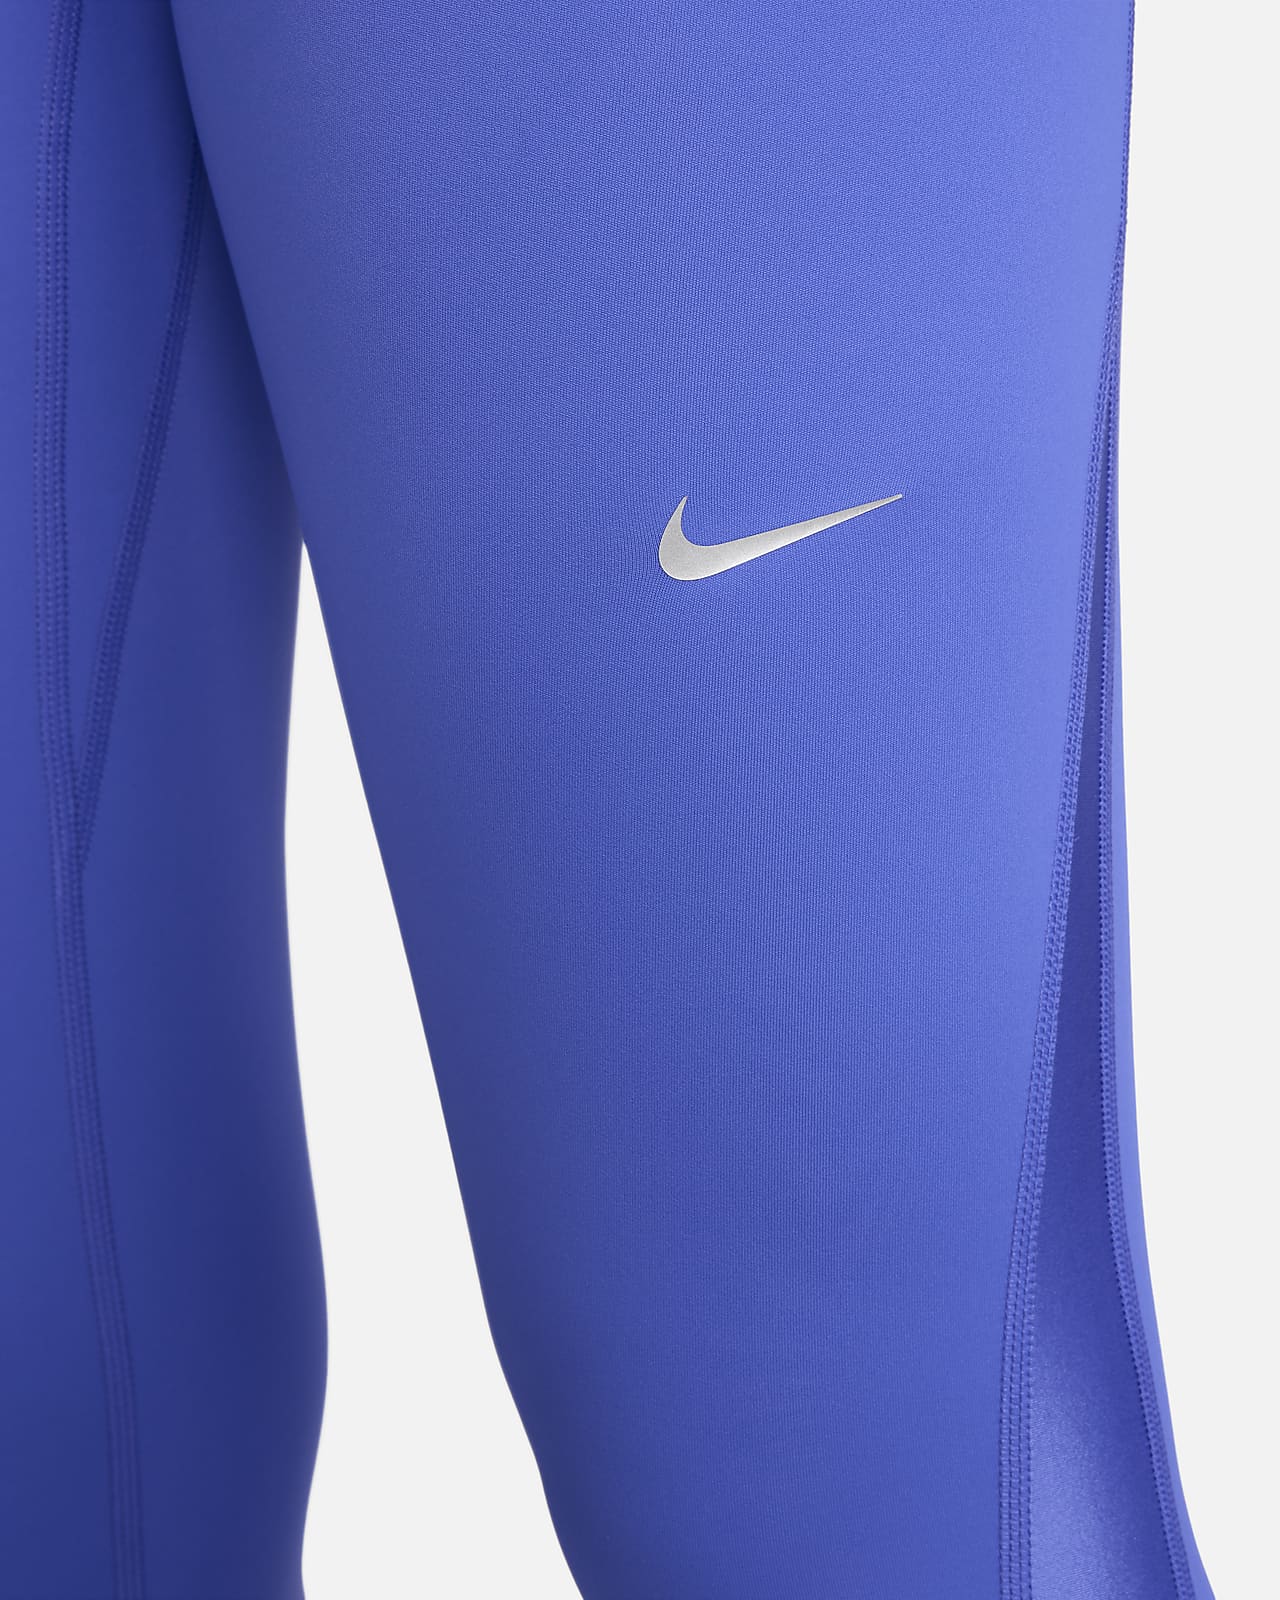 Nike Pro Warm Women's 7/8 Tights 7/8 Length Leggings in Light